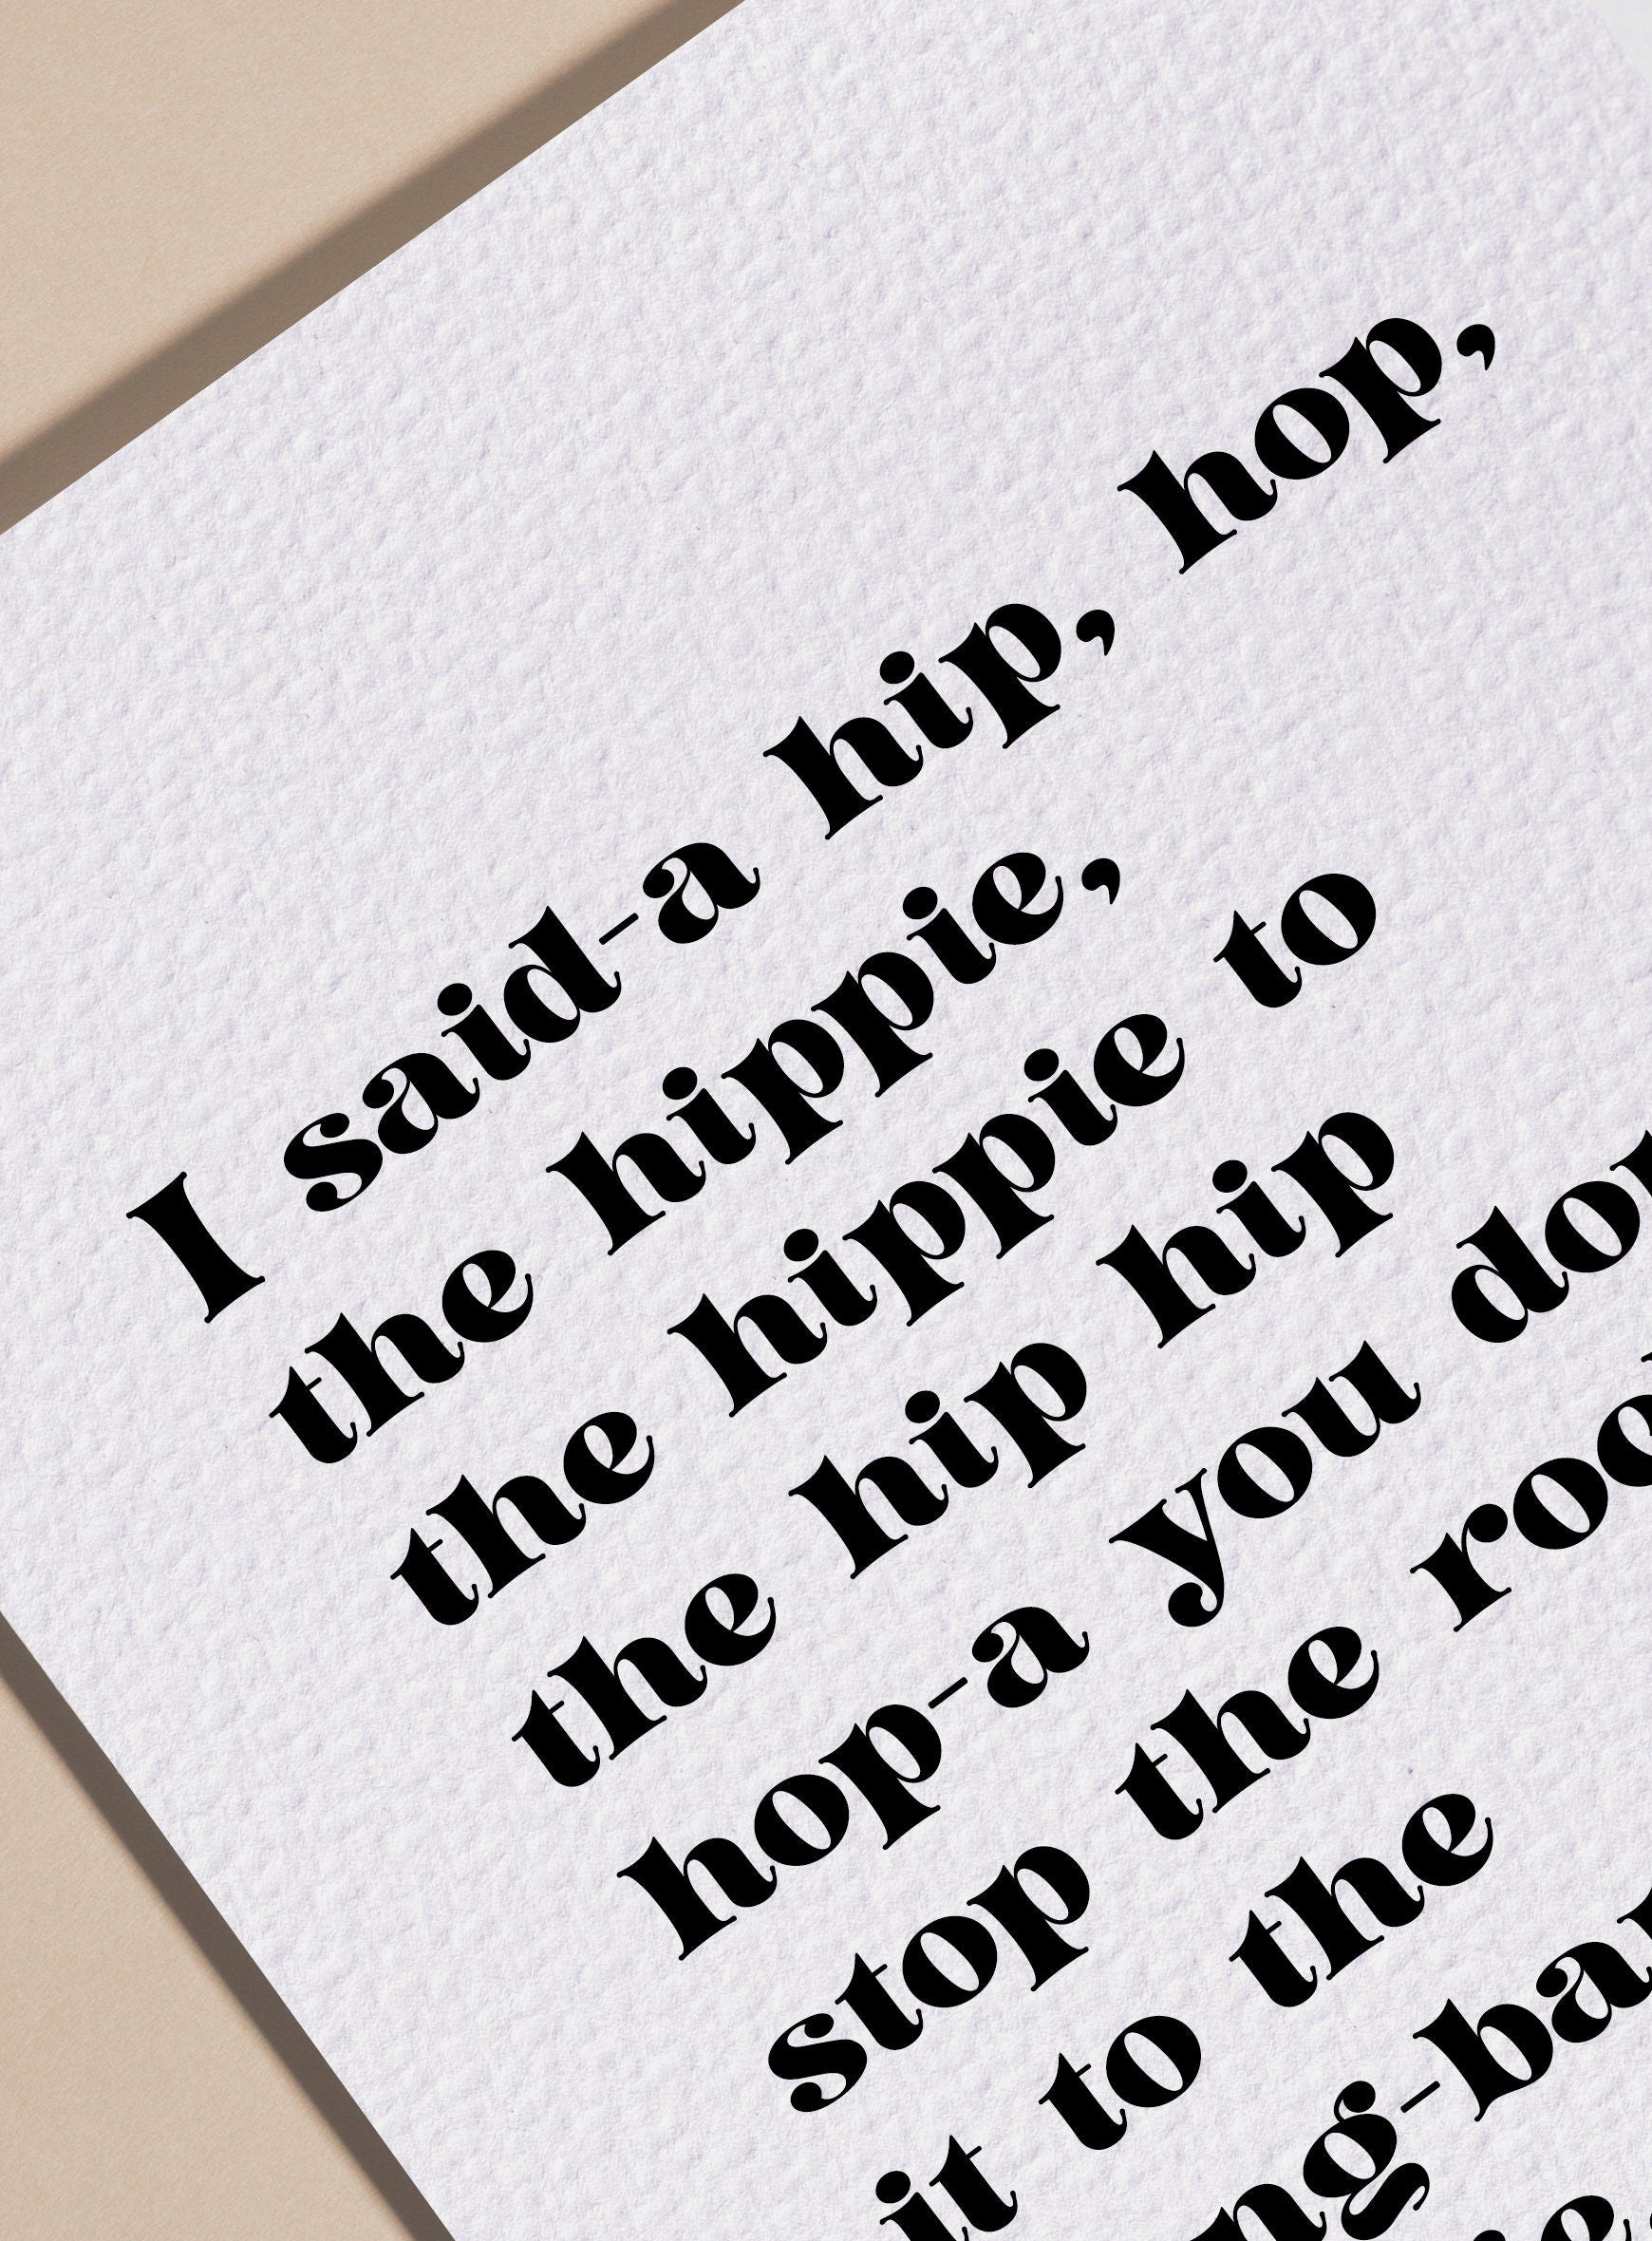 Hip Hop Song Lyrics Print - I said hip-hop lyrics poster framed - Music Wall Print - Hip Hop Print - Rapper's Delight - Sugarhill Gang